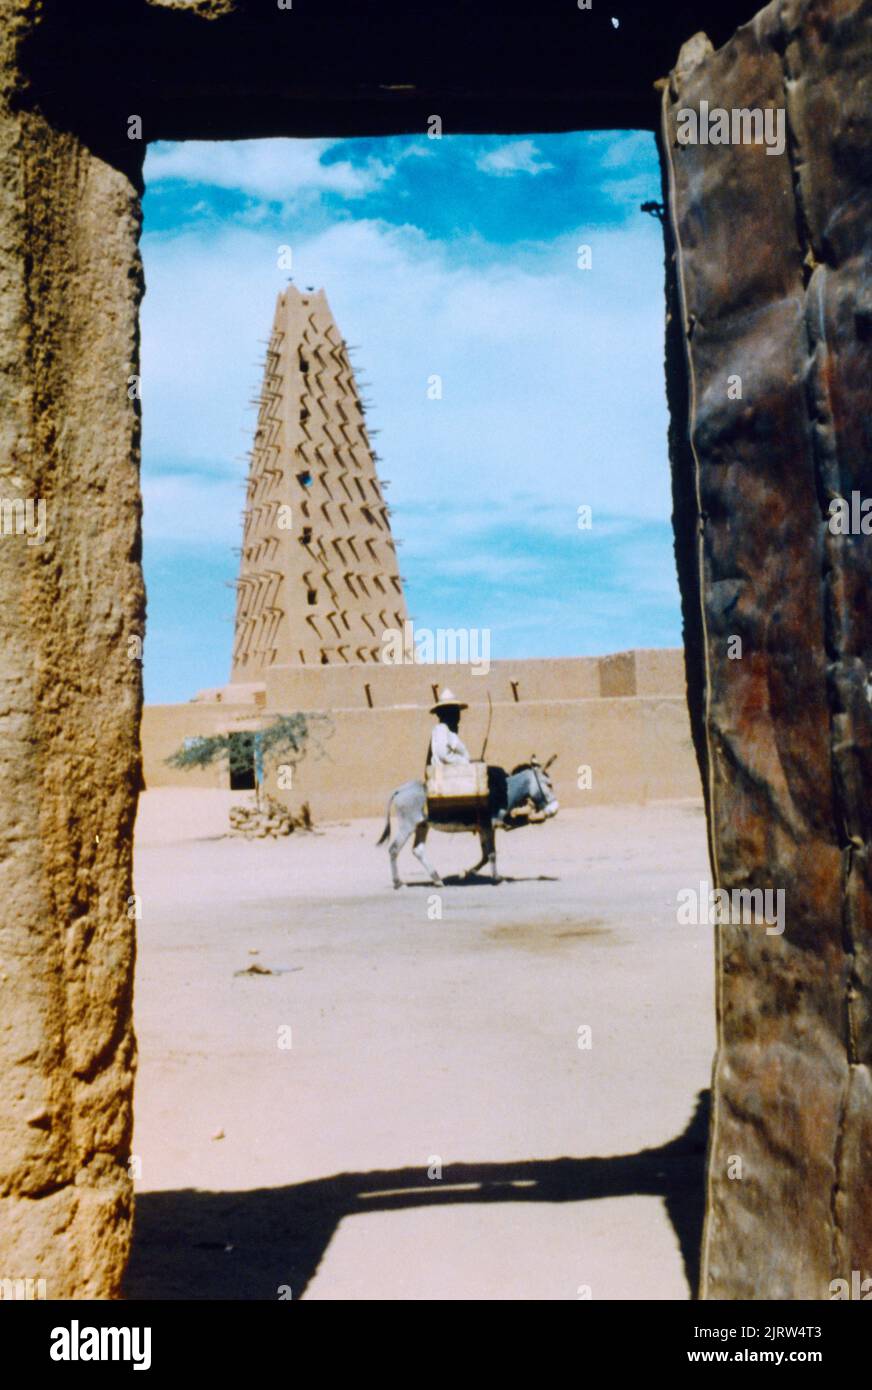 Agadez Niger Grand Mosque Minaret (Tallest Mudbrick Minaret in the World) Man on Donkey Stock Photo